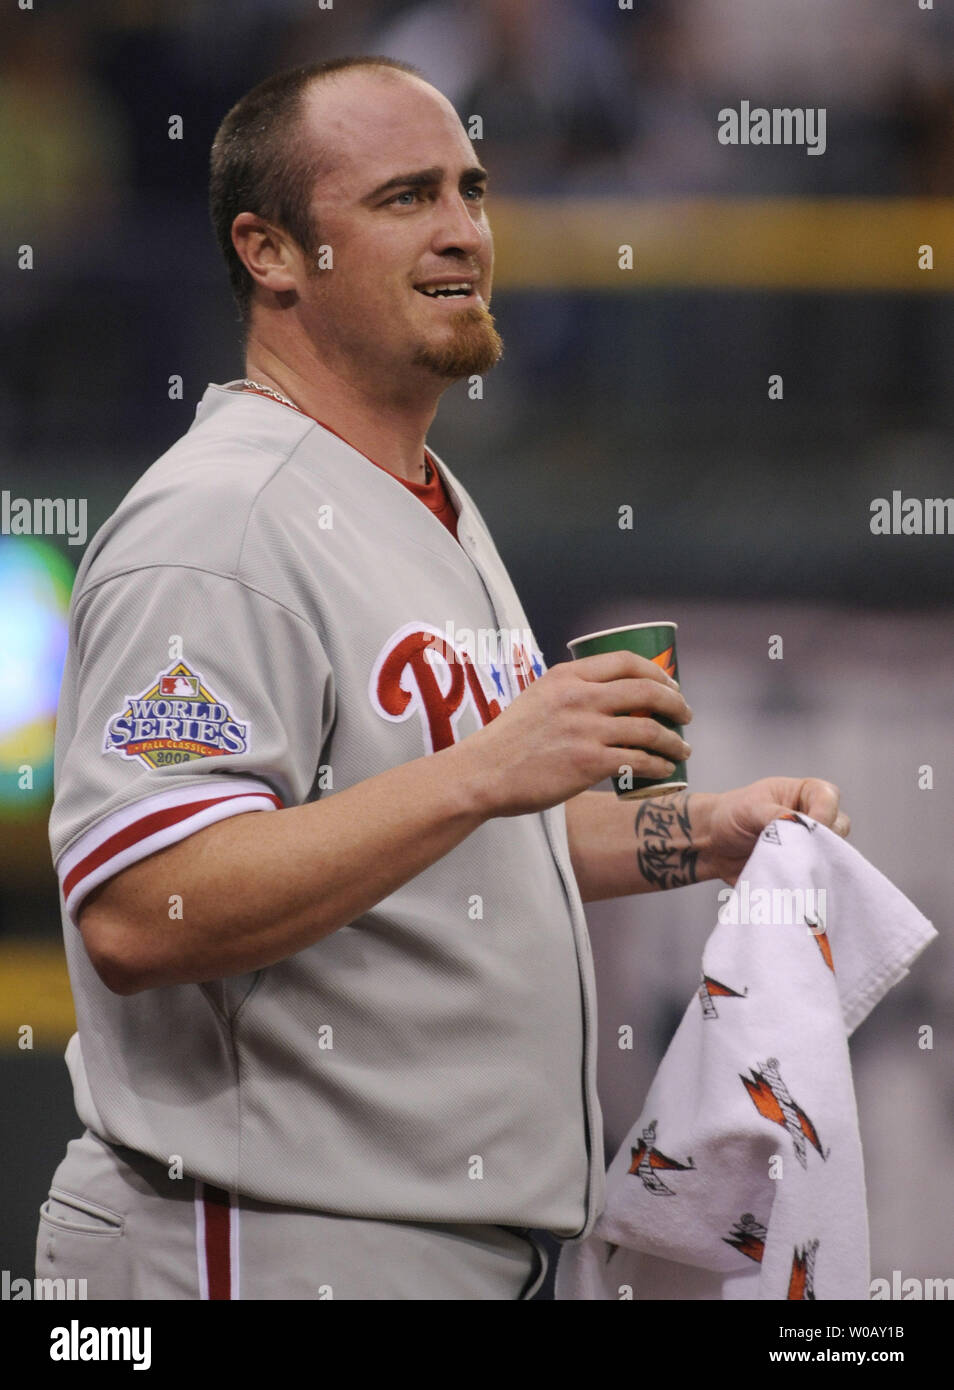 Brett Myers Signed 8×10 Photo – Phillies 2008 World Series Trophy